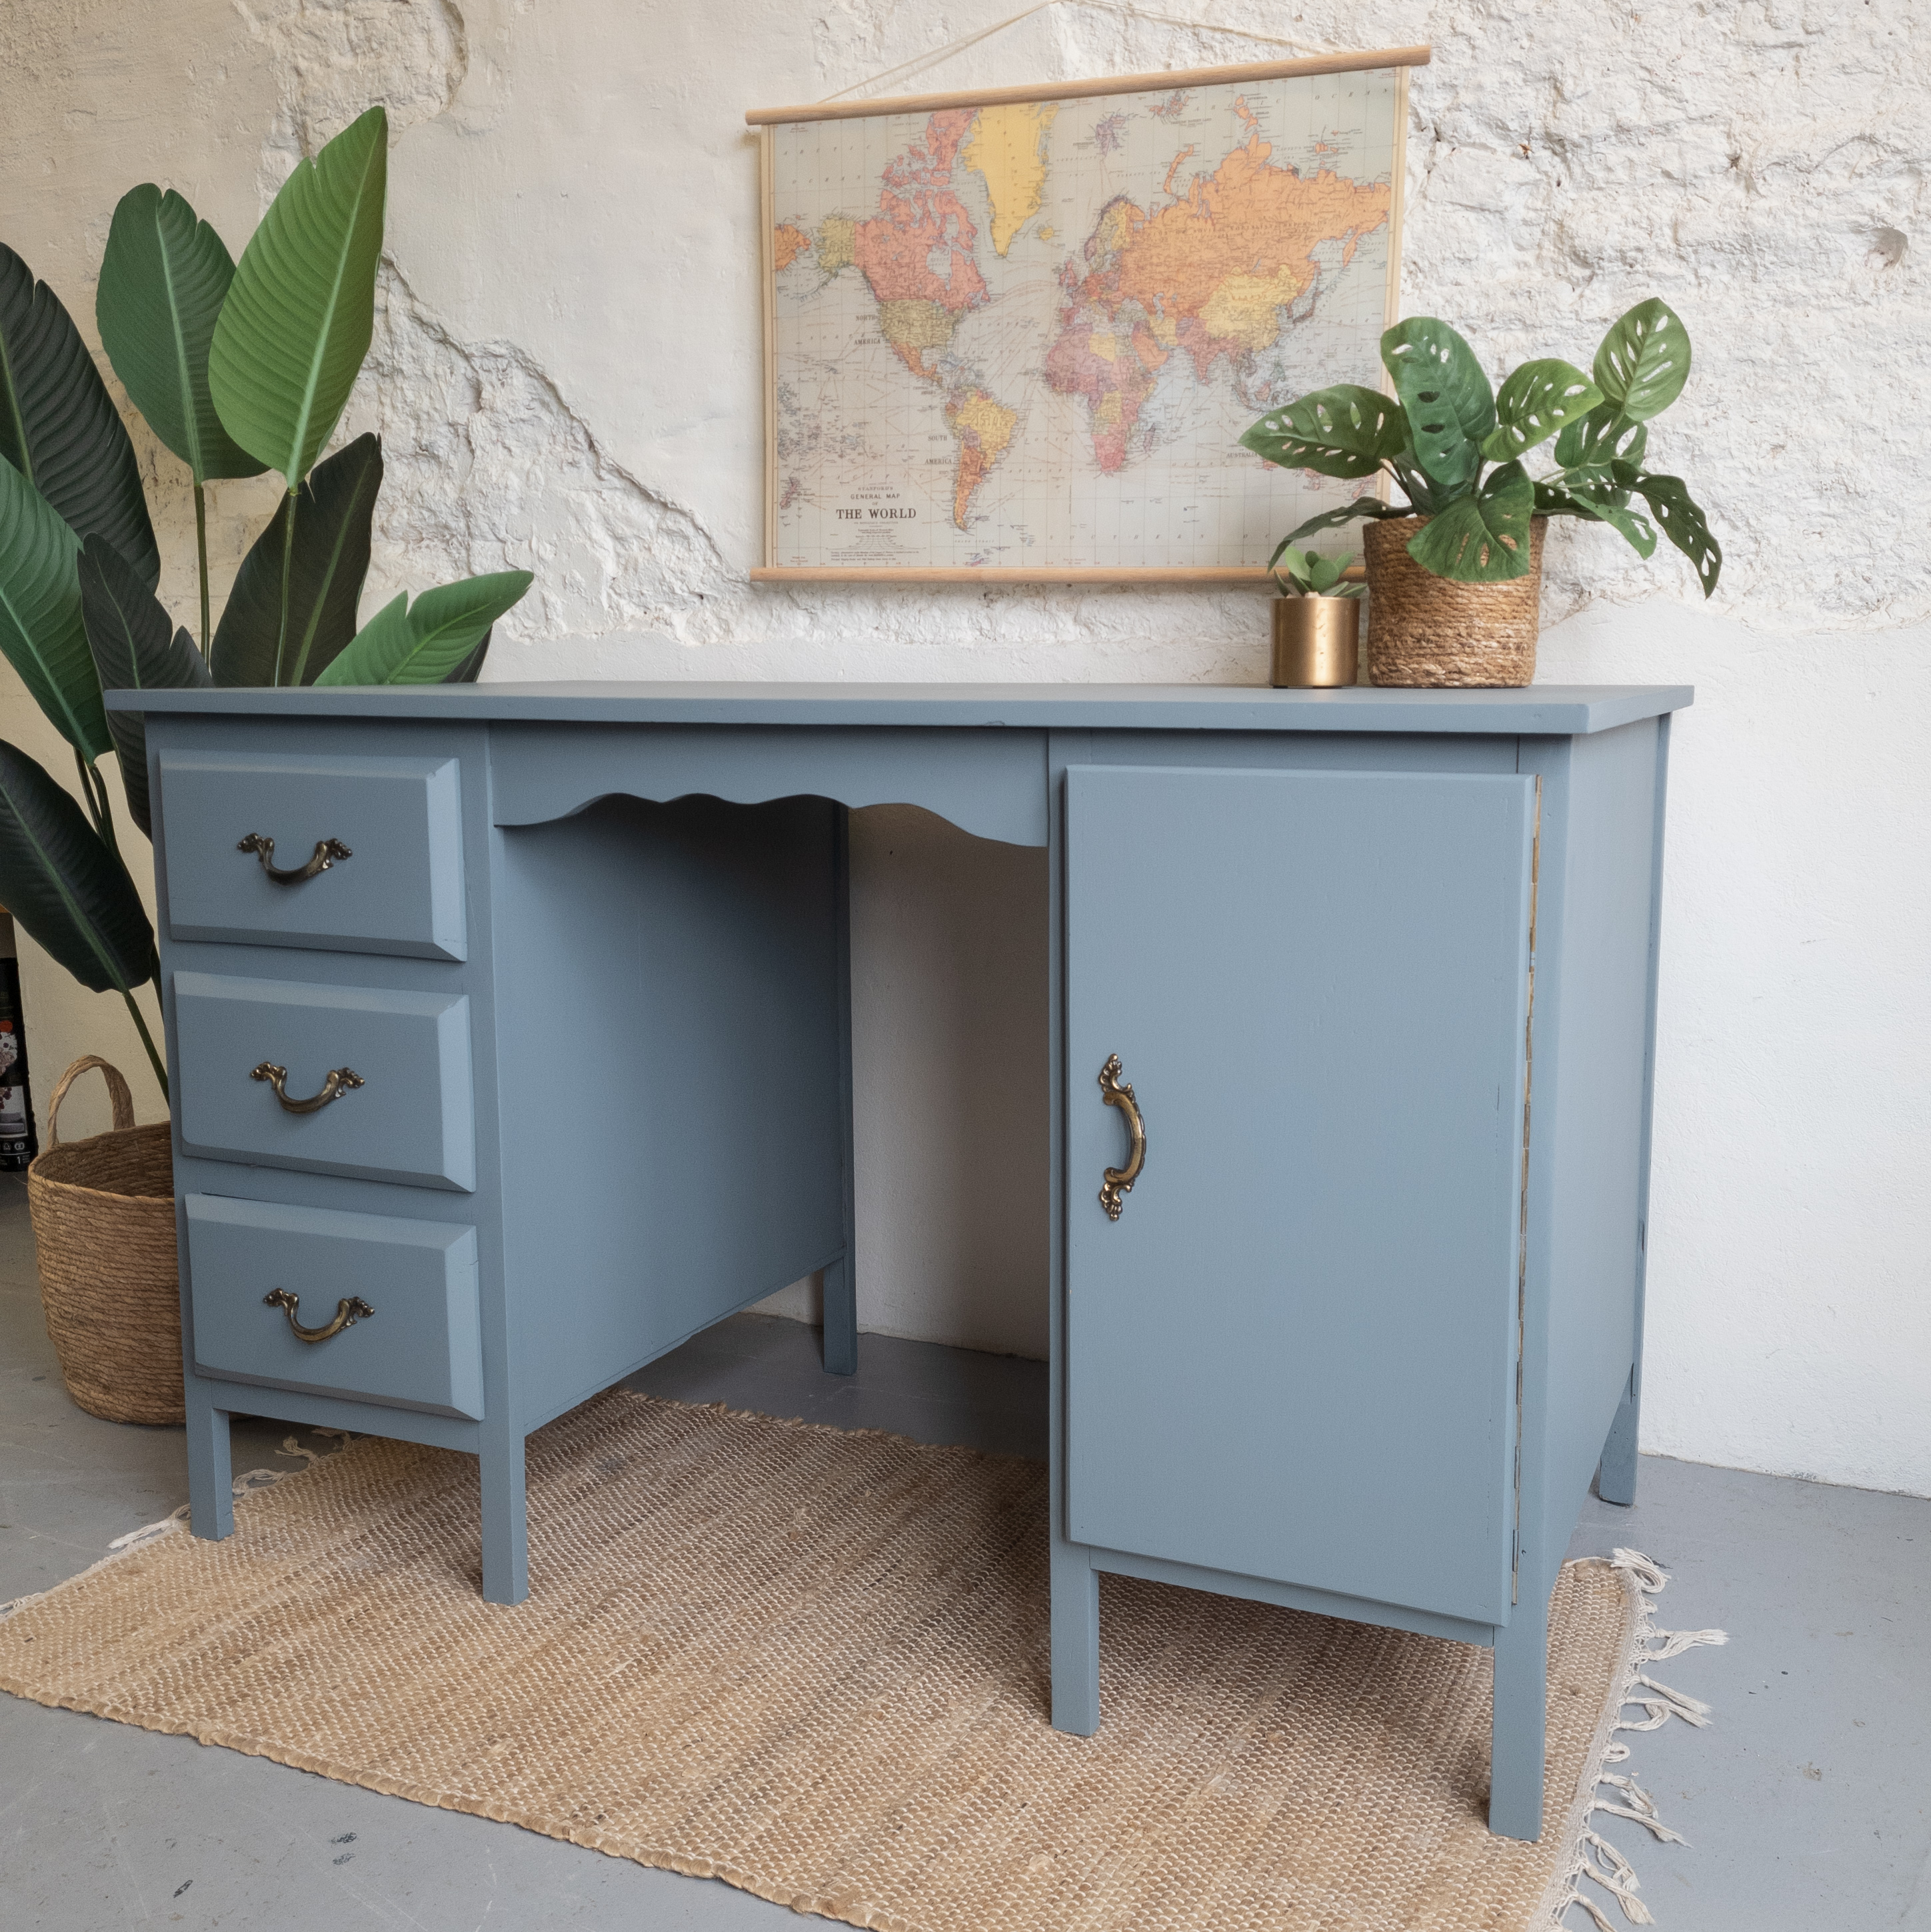 Dalset Samuel Aangepaste Vintage bureau geverfd met Fusion Mineral Paint in de kleur Blue pine